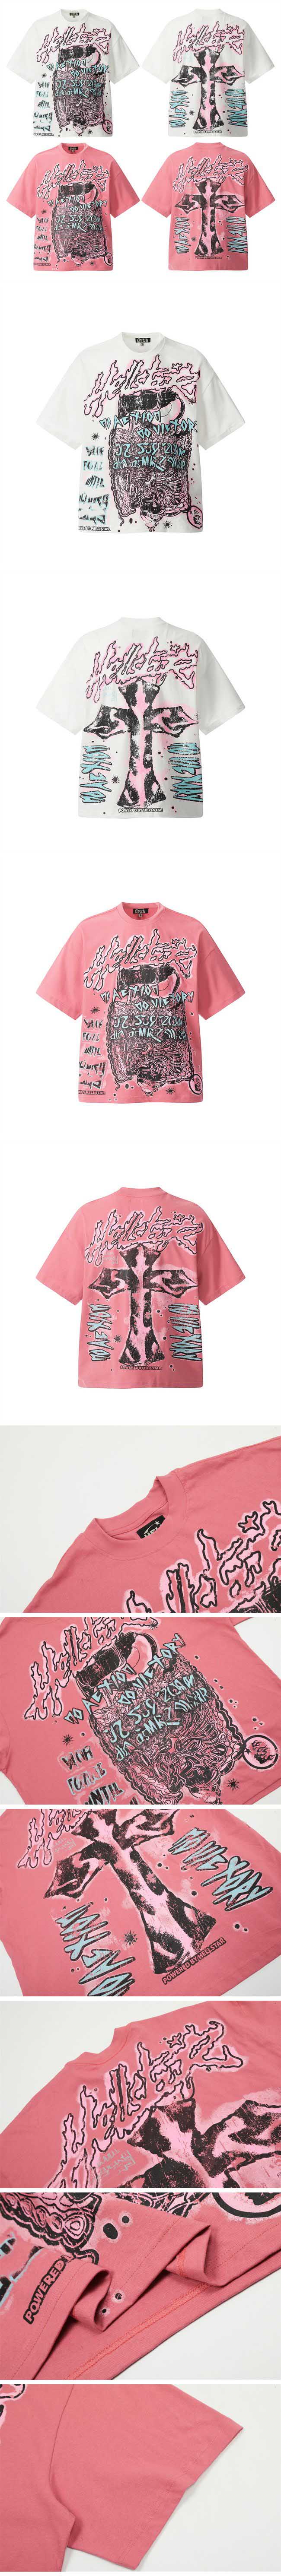 Hellstar Human Back Cross Print Tee ヘルスター バッククロス プリント Tシャツ